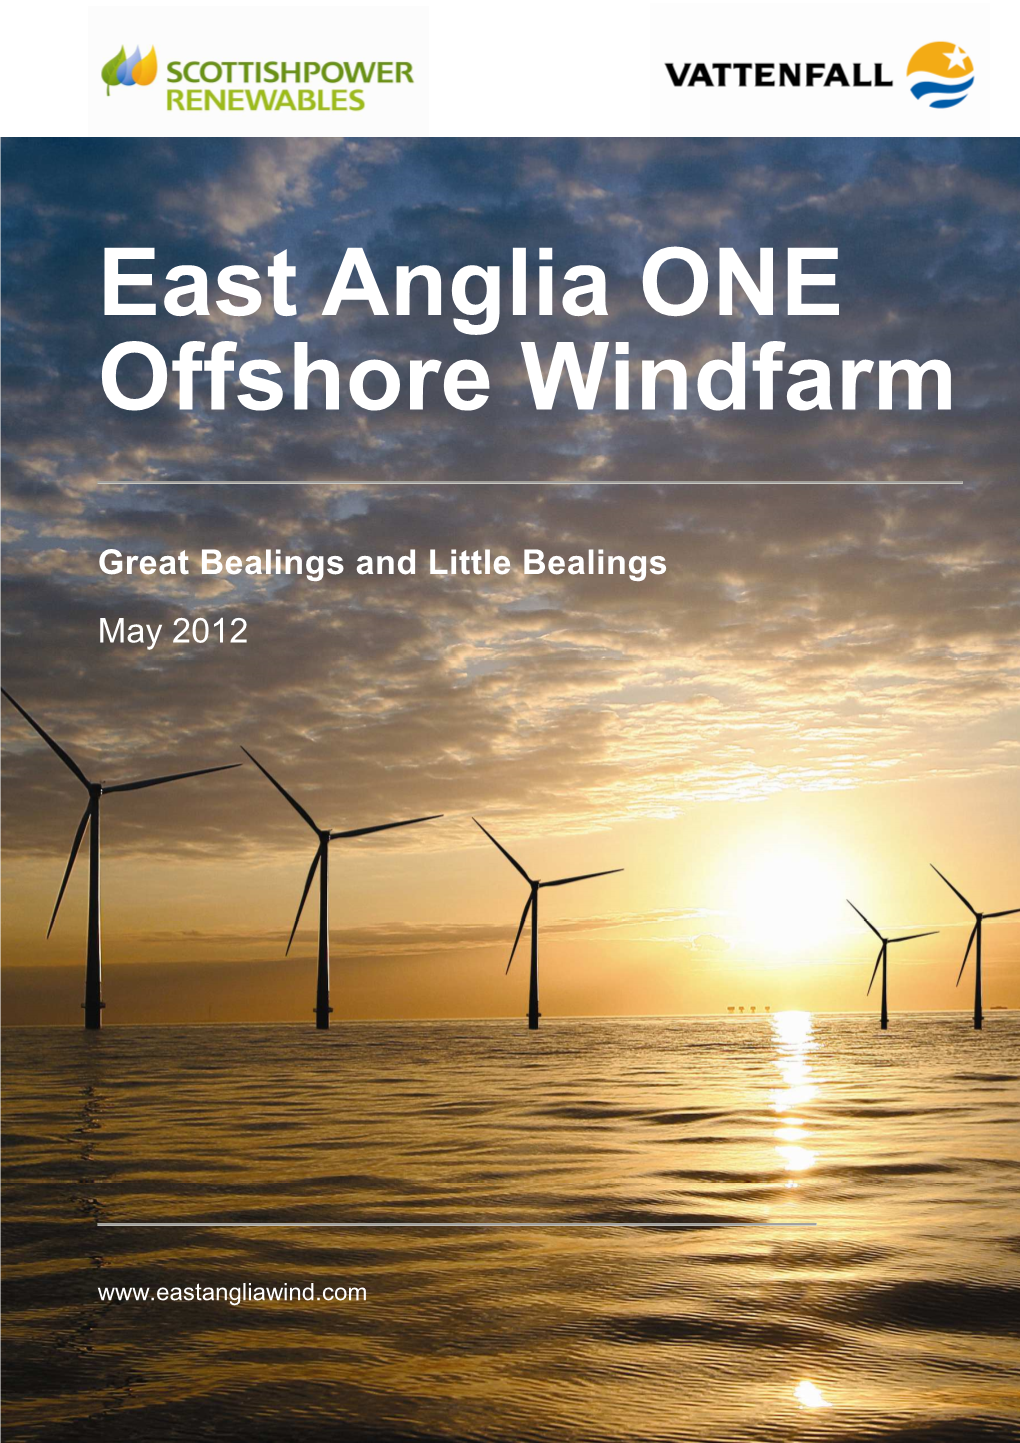 East Anglia ONE Offshore Windfarm